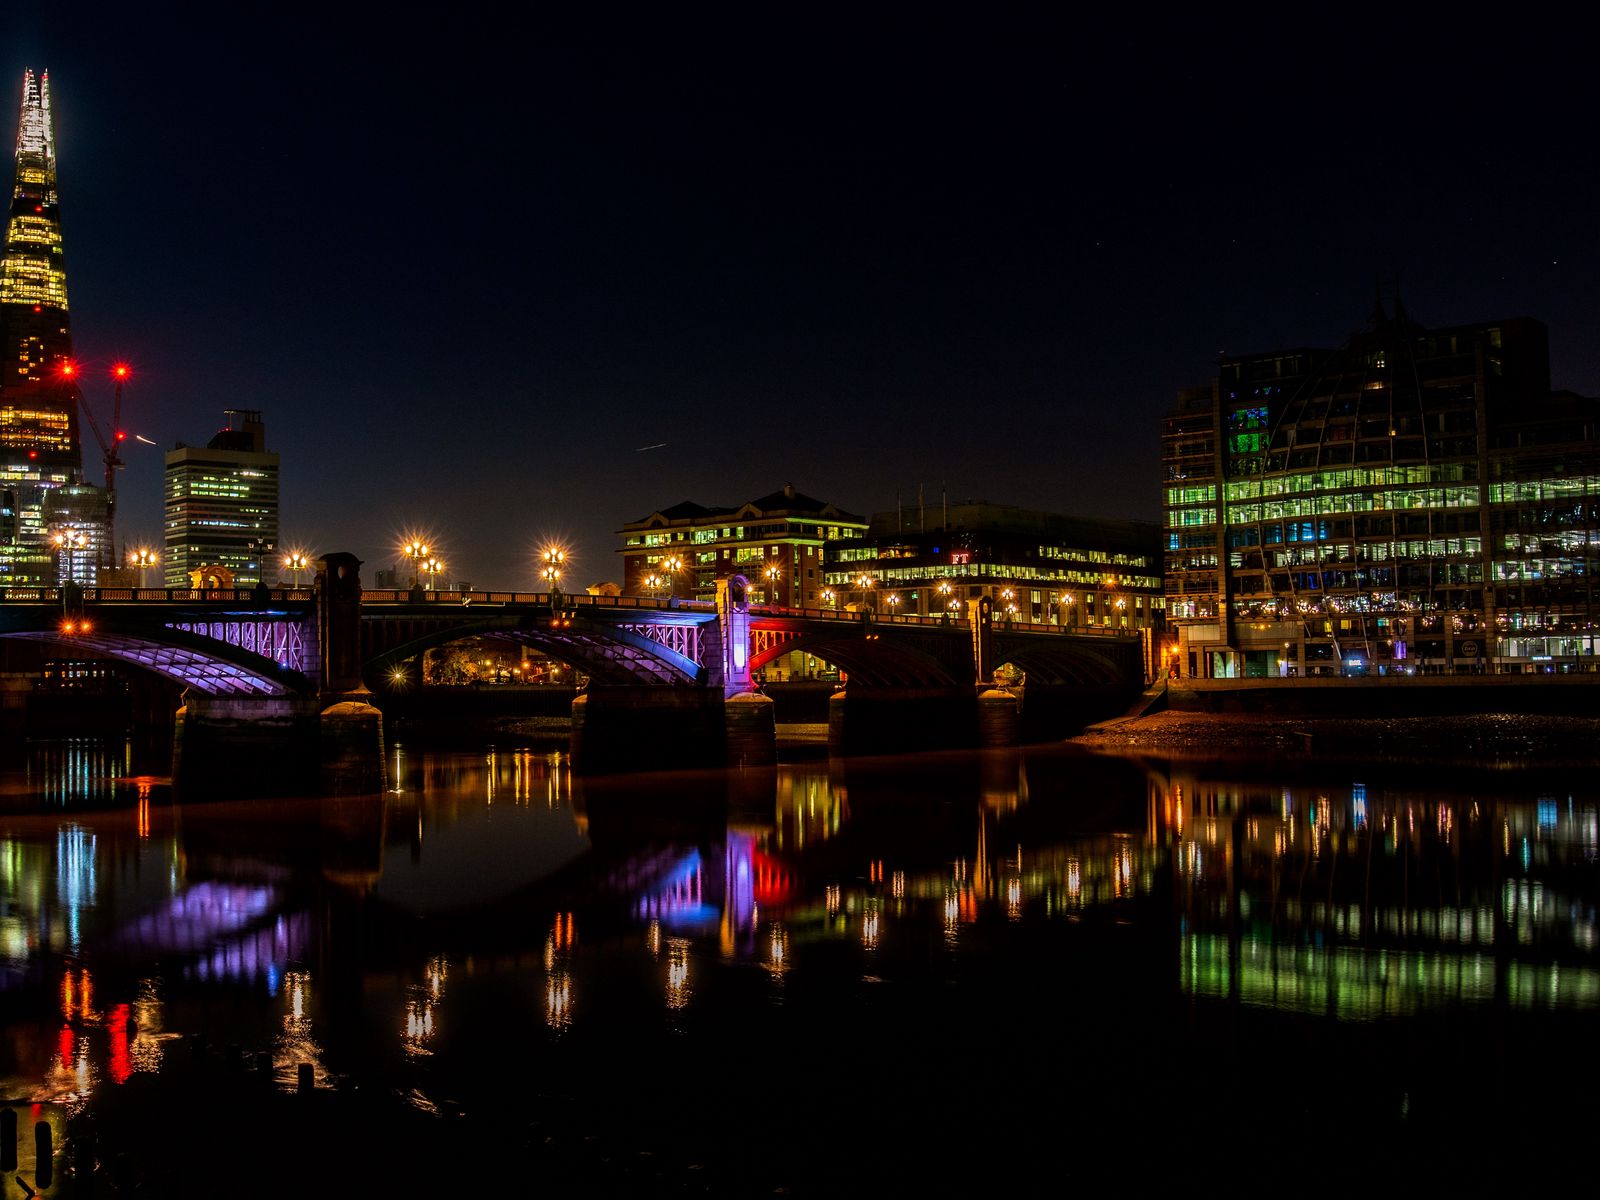 Download wallpaper 1600x1200 night city, city lights, bridge, river, thames,  london, uk standard 4:3 hd background